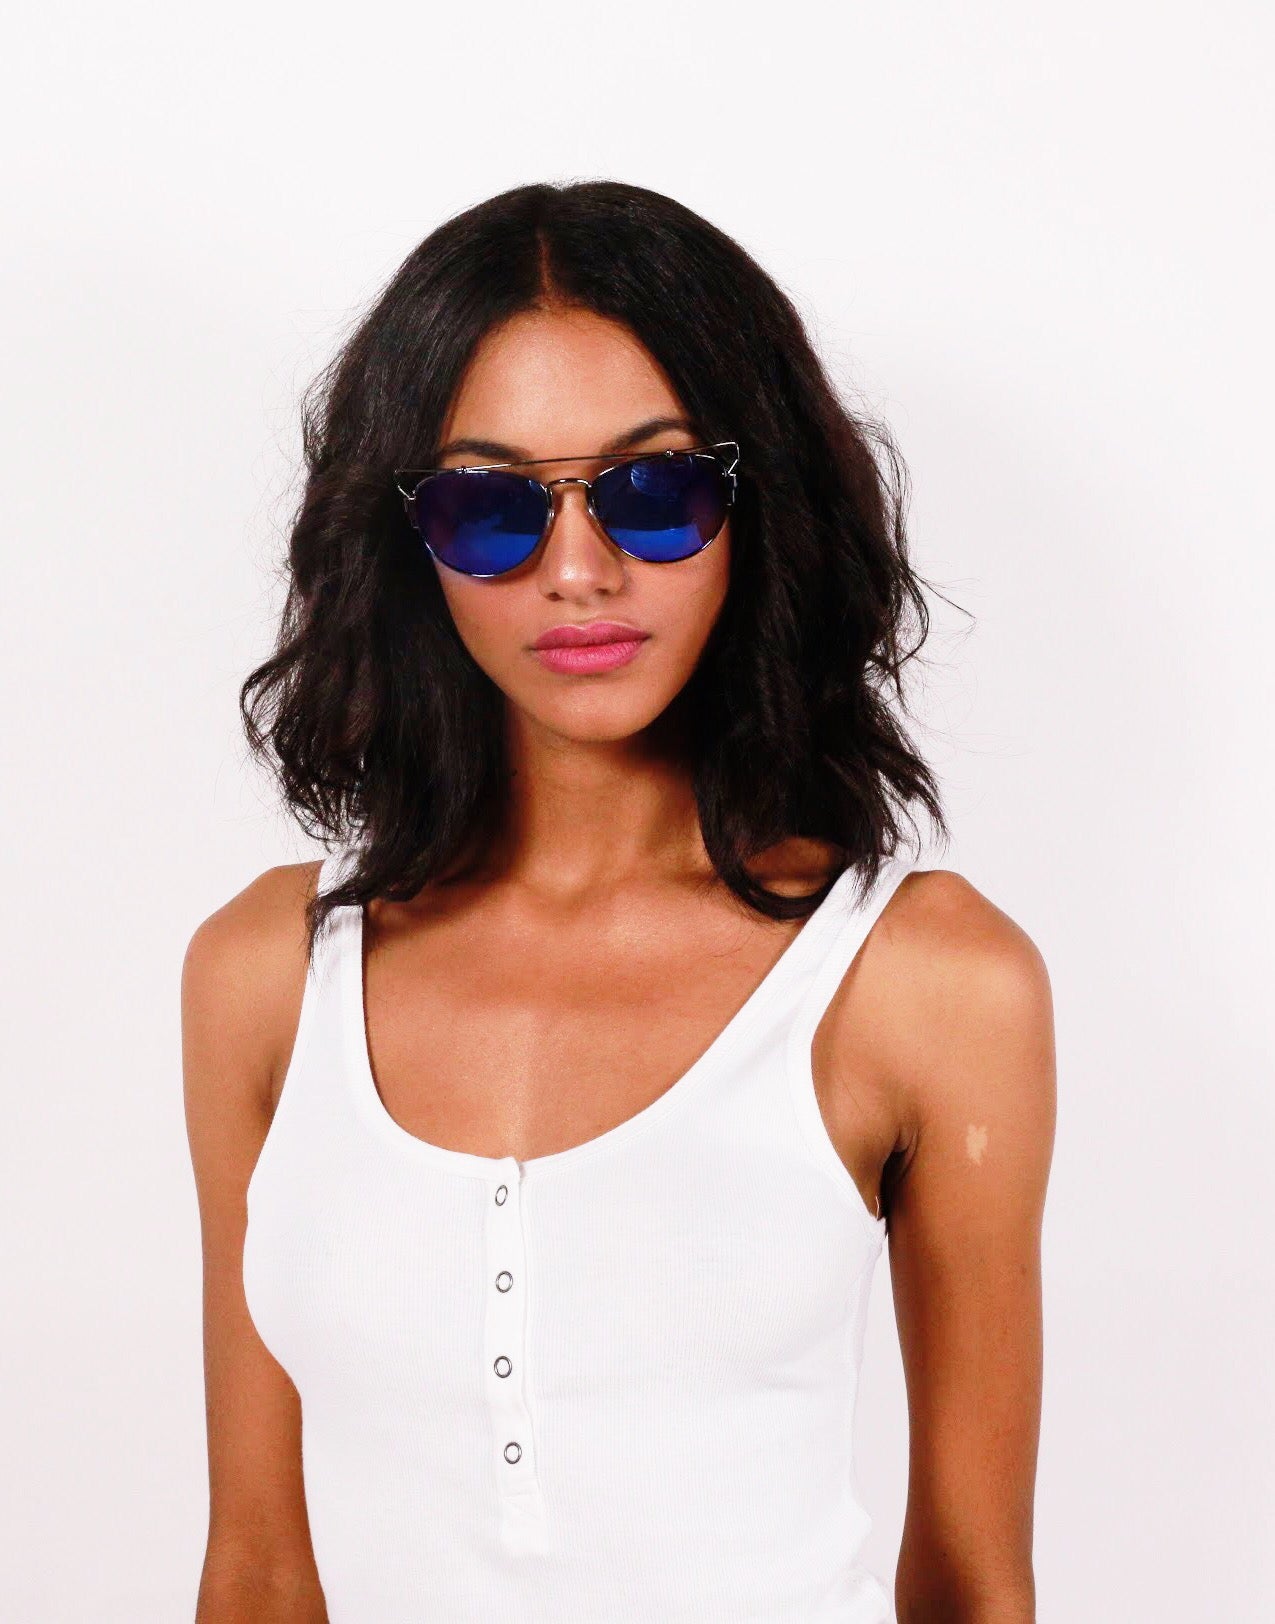 Girl in white shirt wearing blue elenur sunglasses